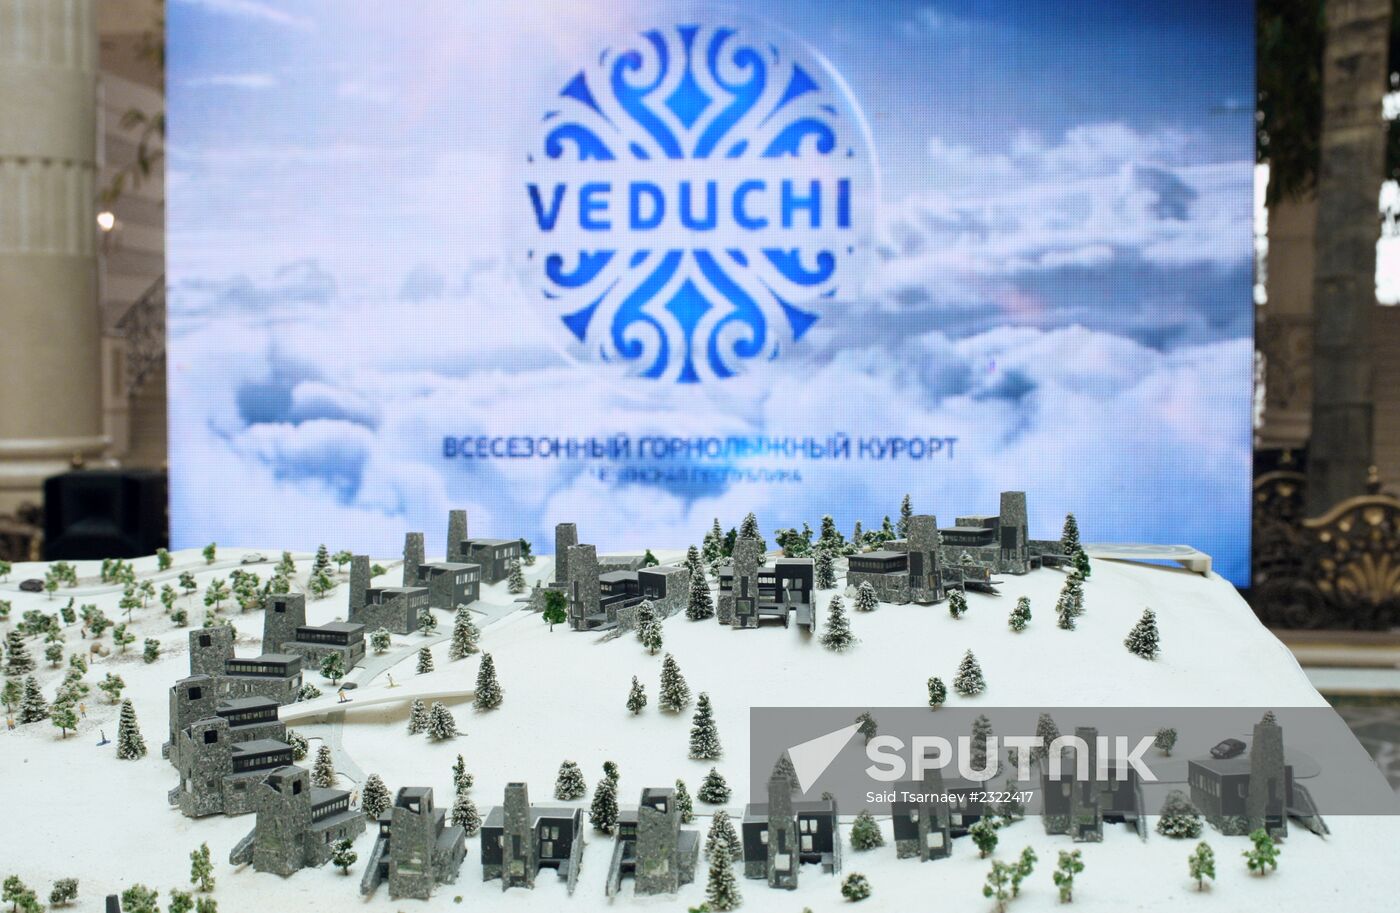 Veduchi skiing resort presented in Grozny